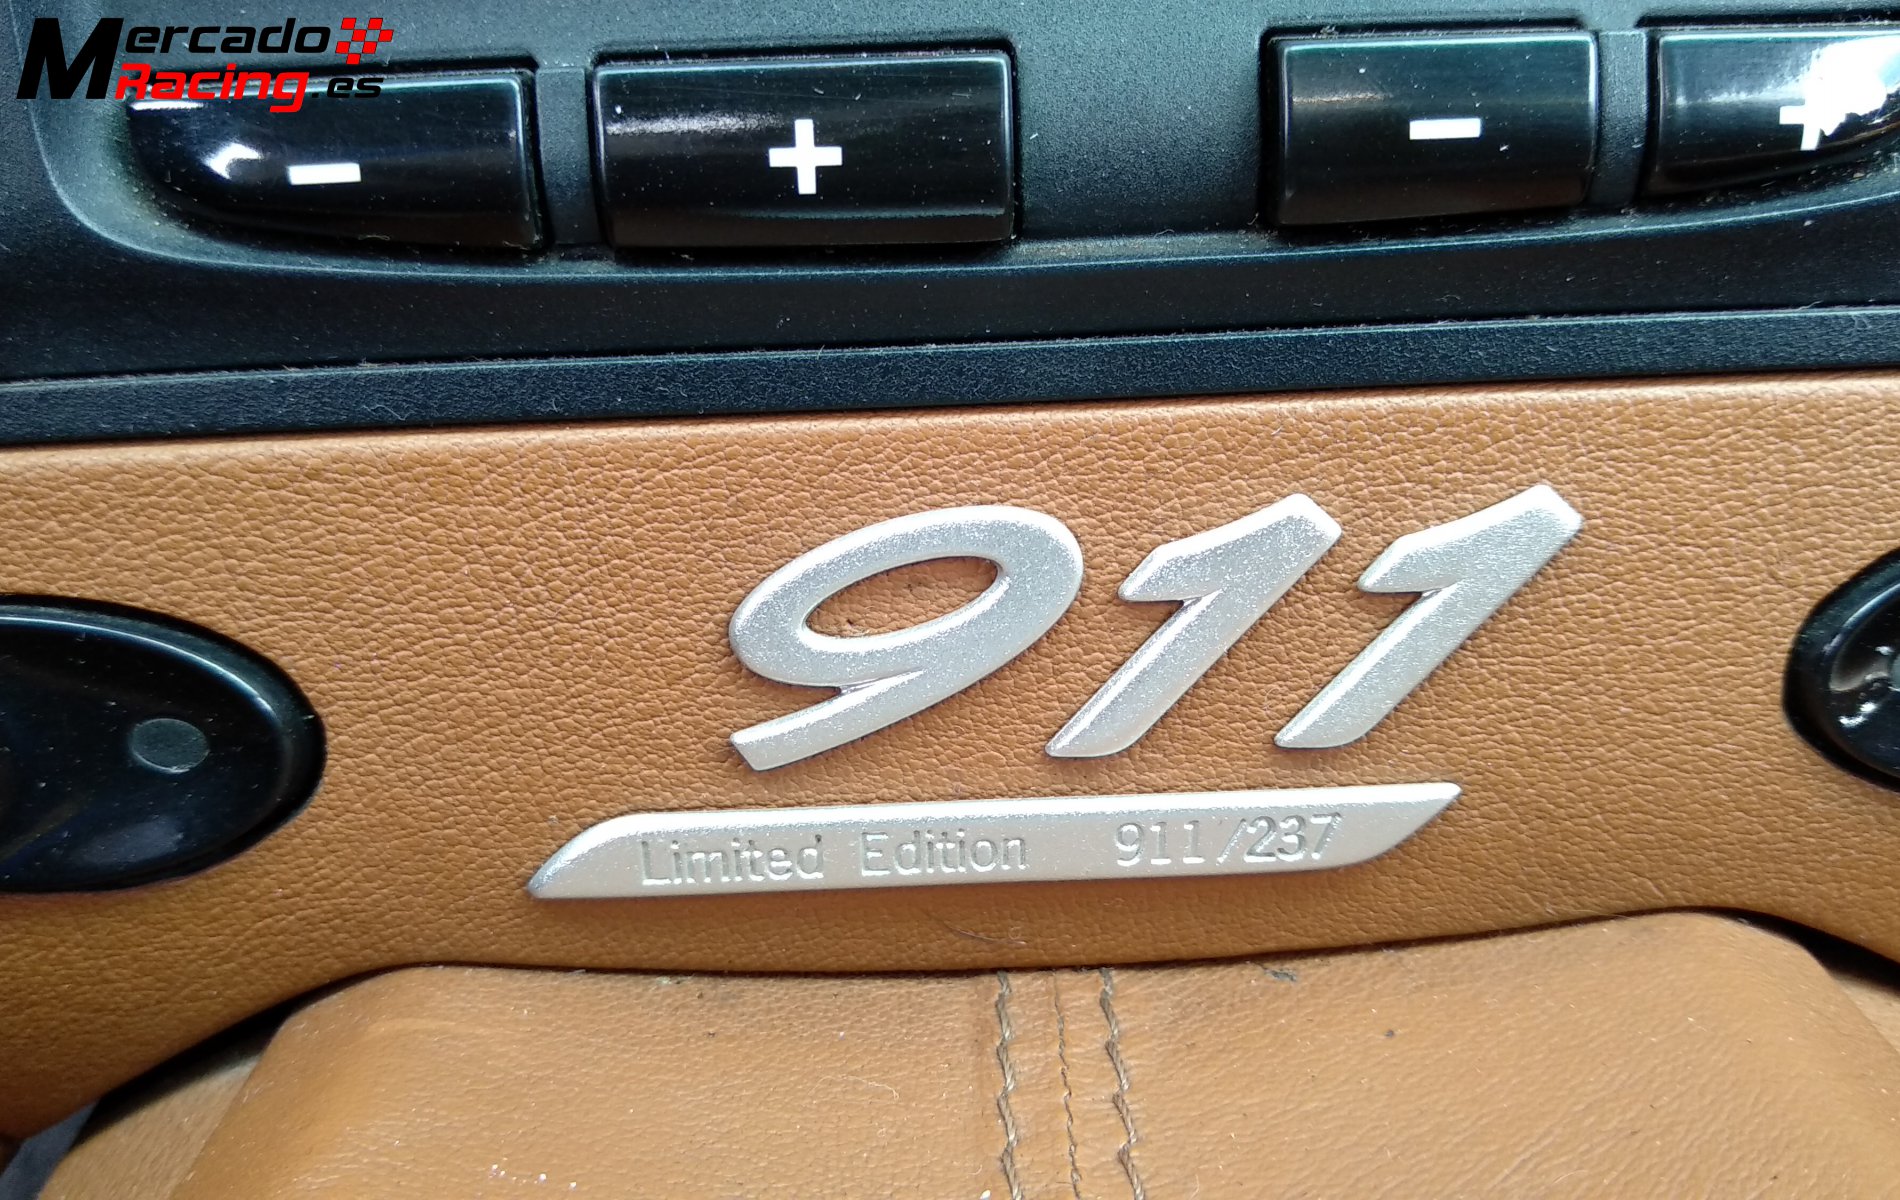 Vendo porsche 911-996 carrera 4 edicion milenium